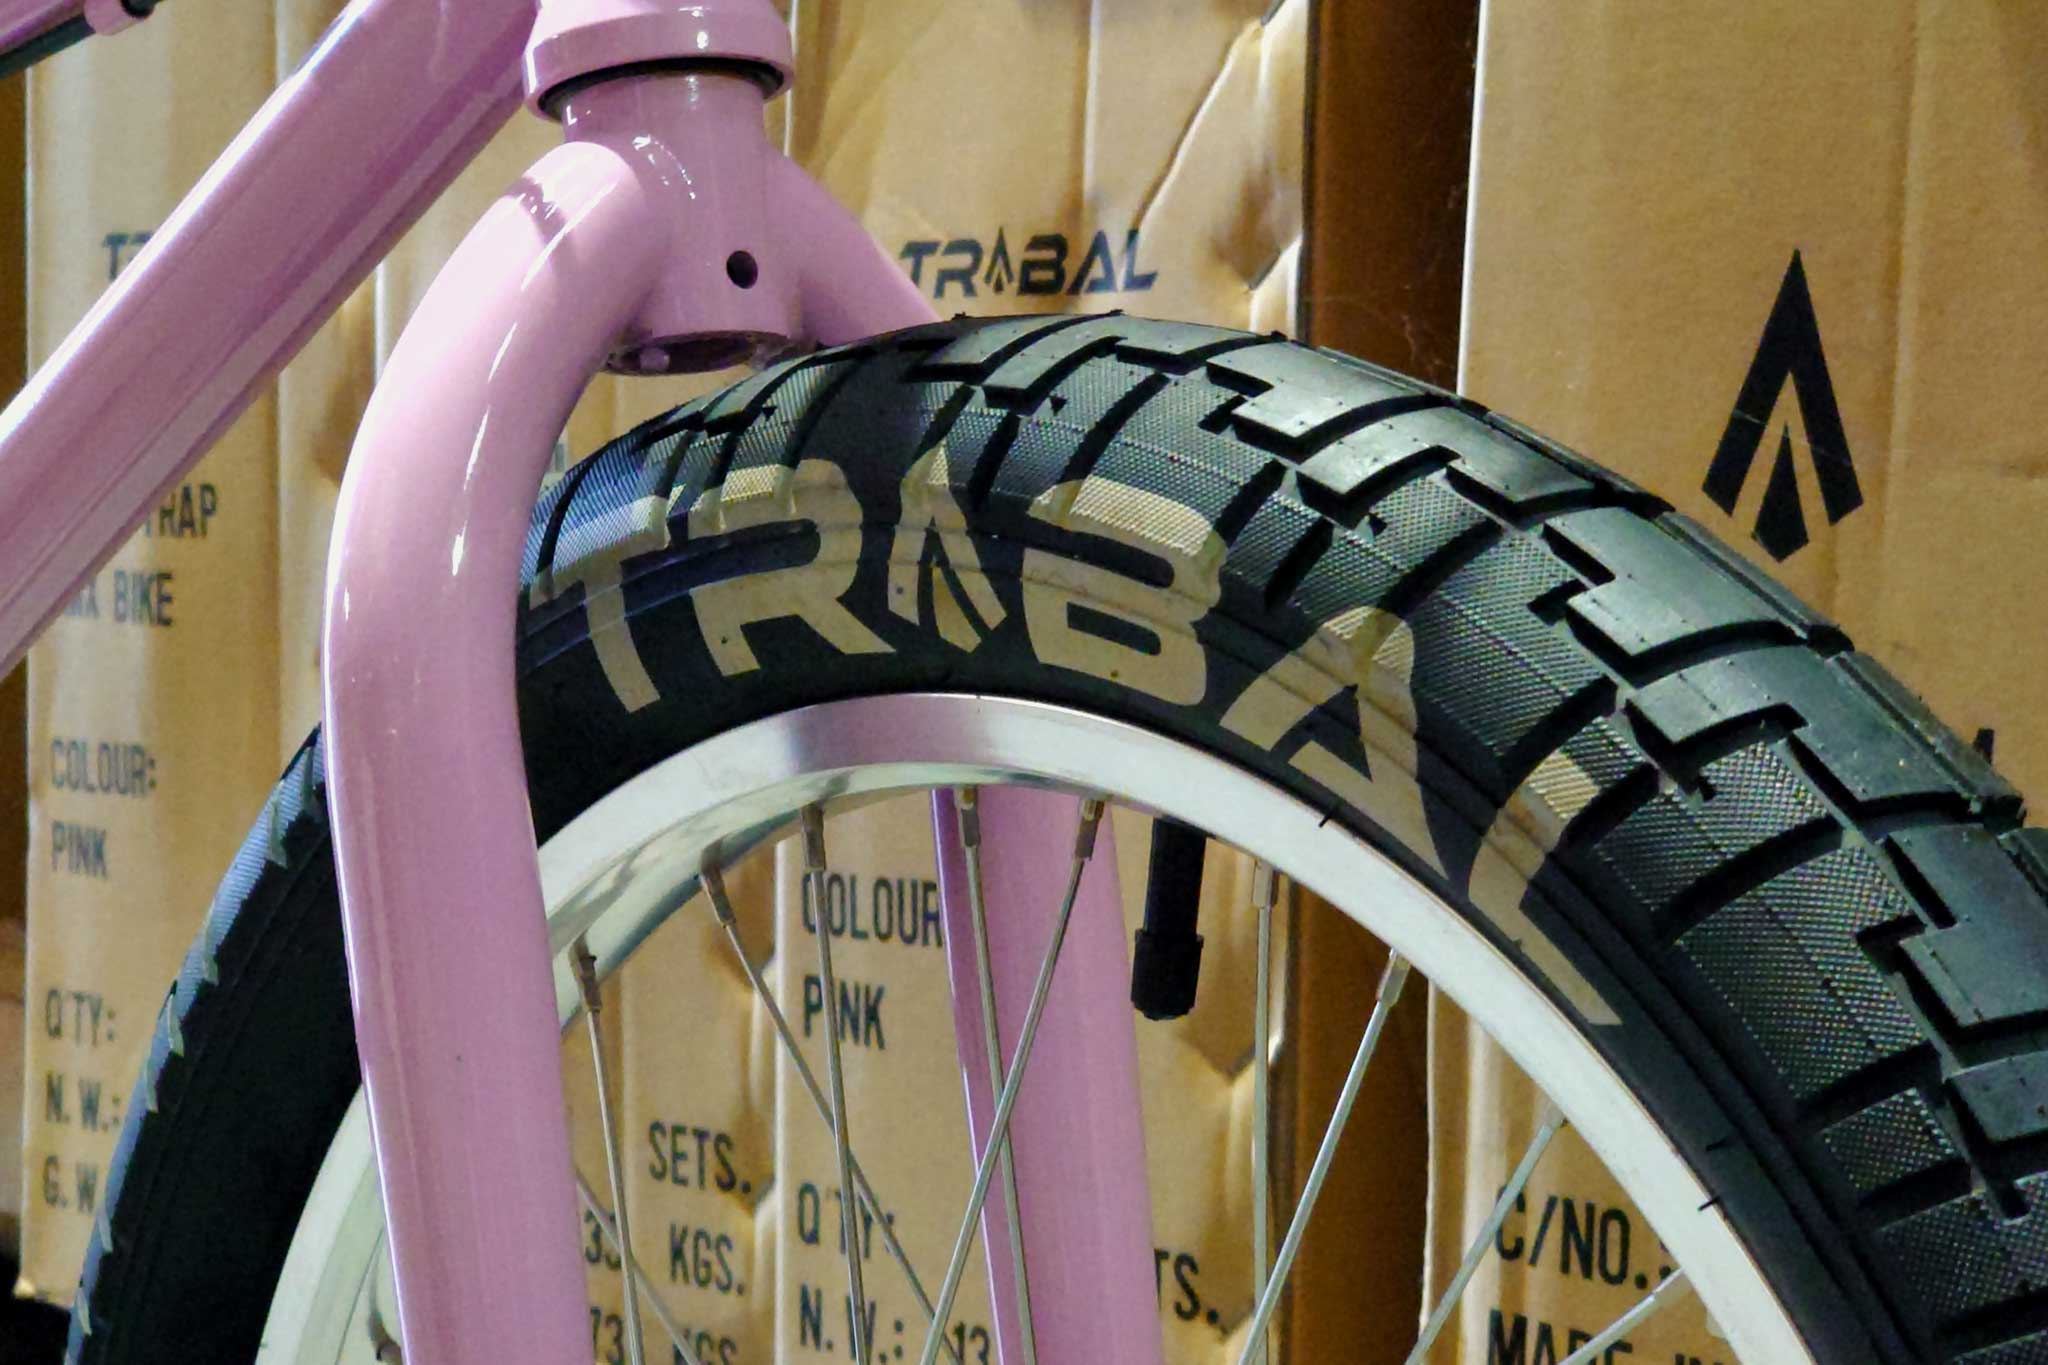 Tribal Trap BMX Bike - Pink